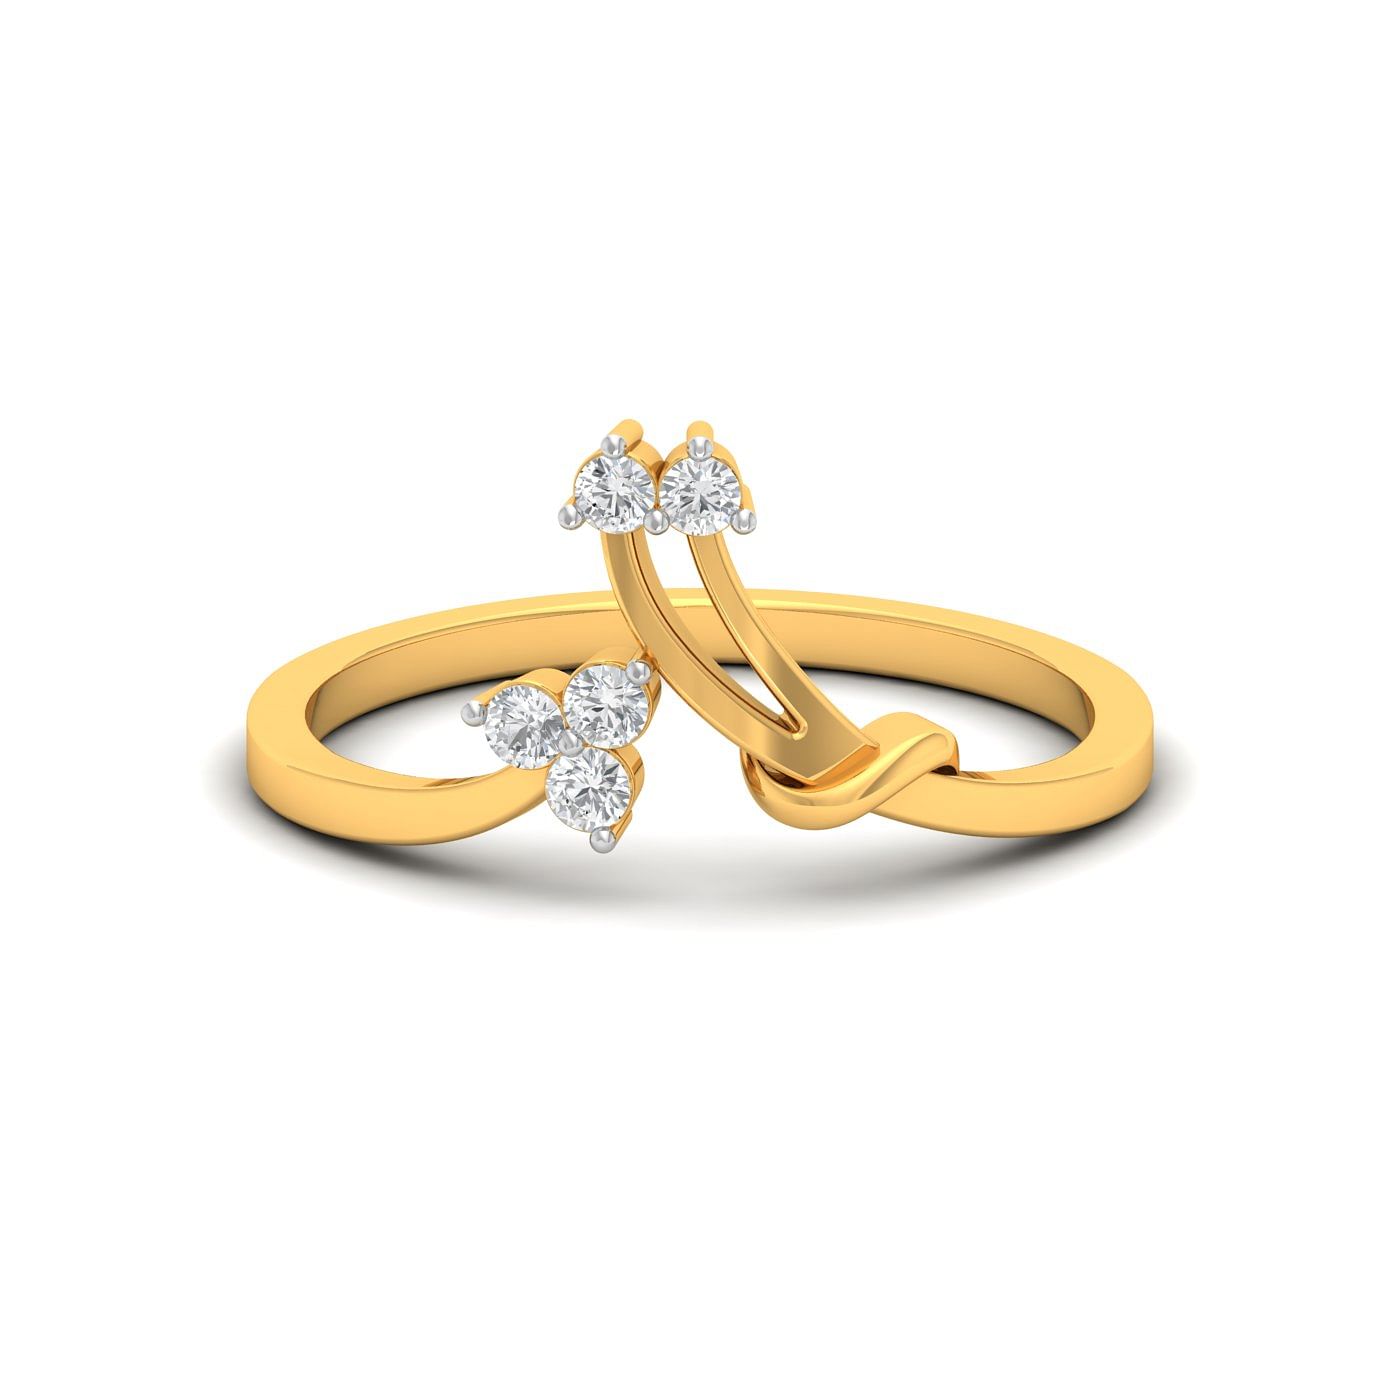 Designer 10k Yellow Gold Bella Vibes Diamond Ring For Her